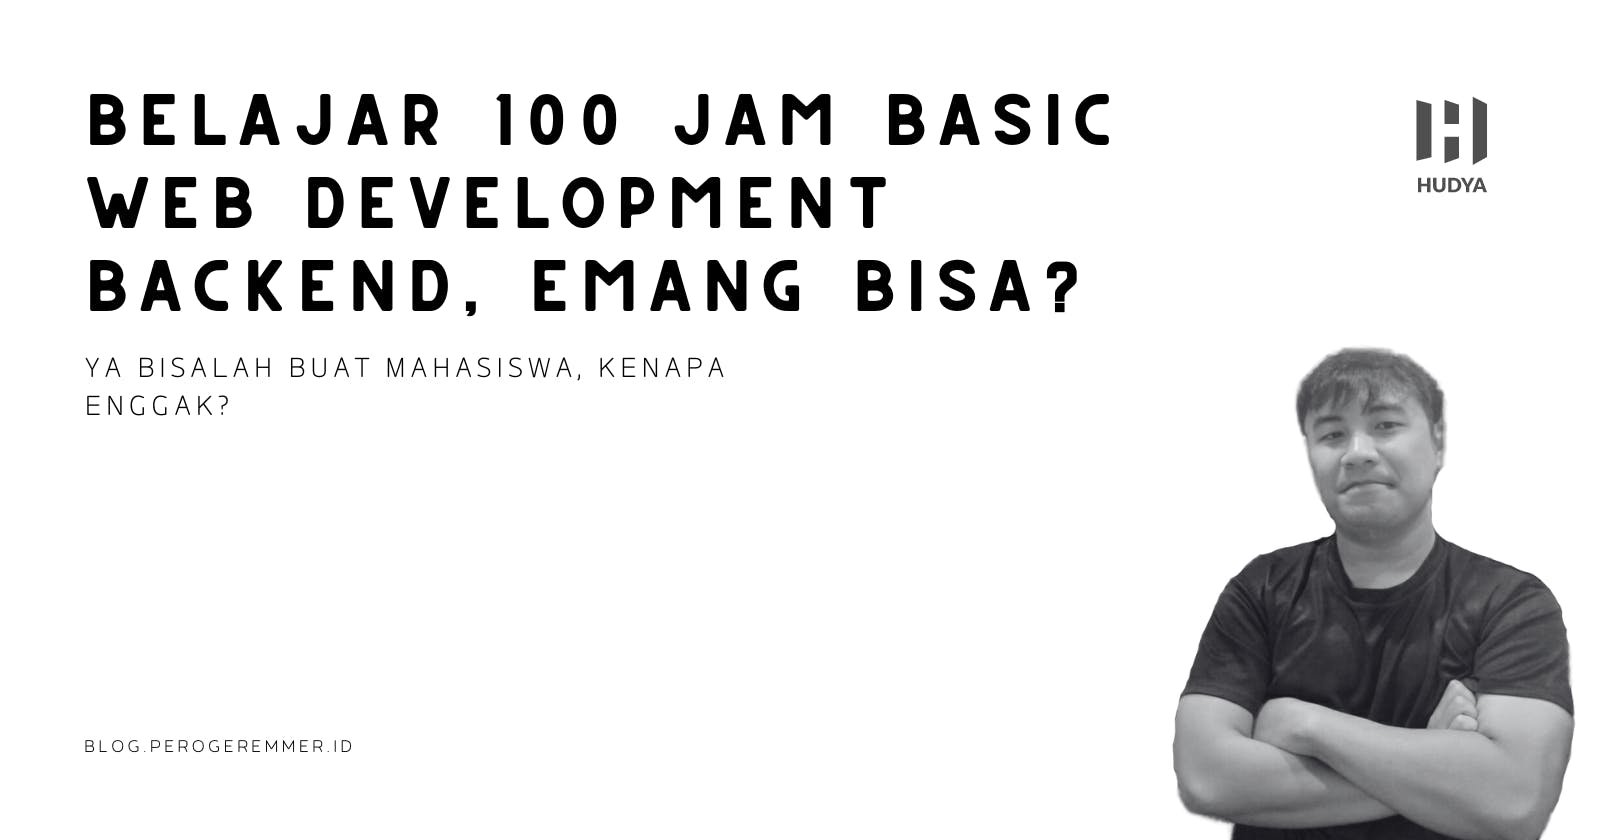 Belajar 100 Jam Basic Web Development Backend, Emang Bisa?